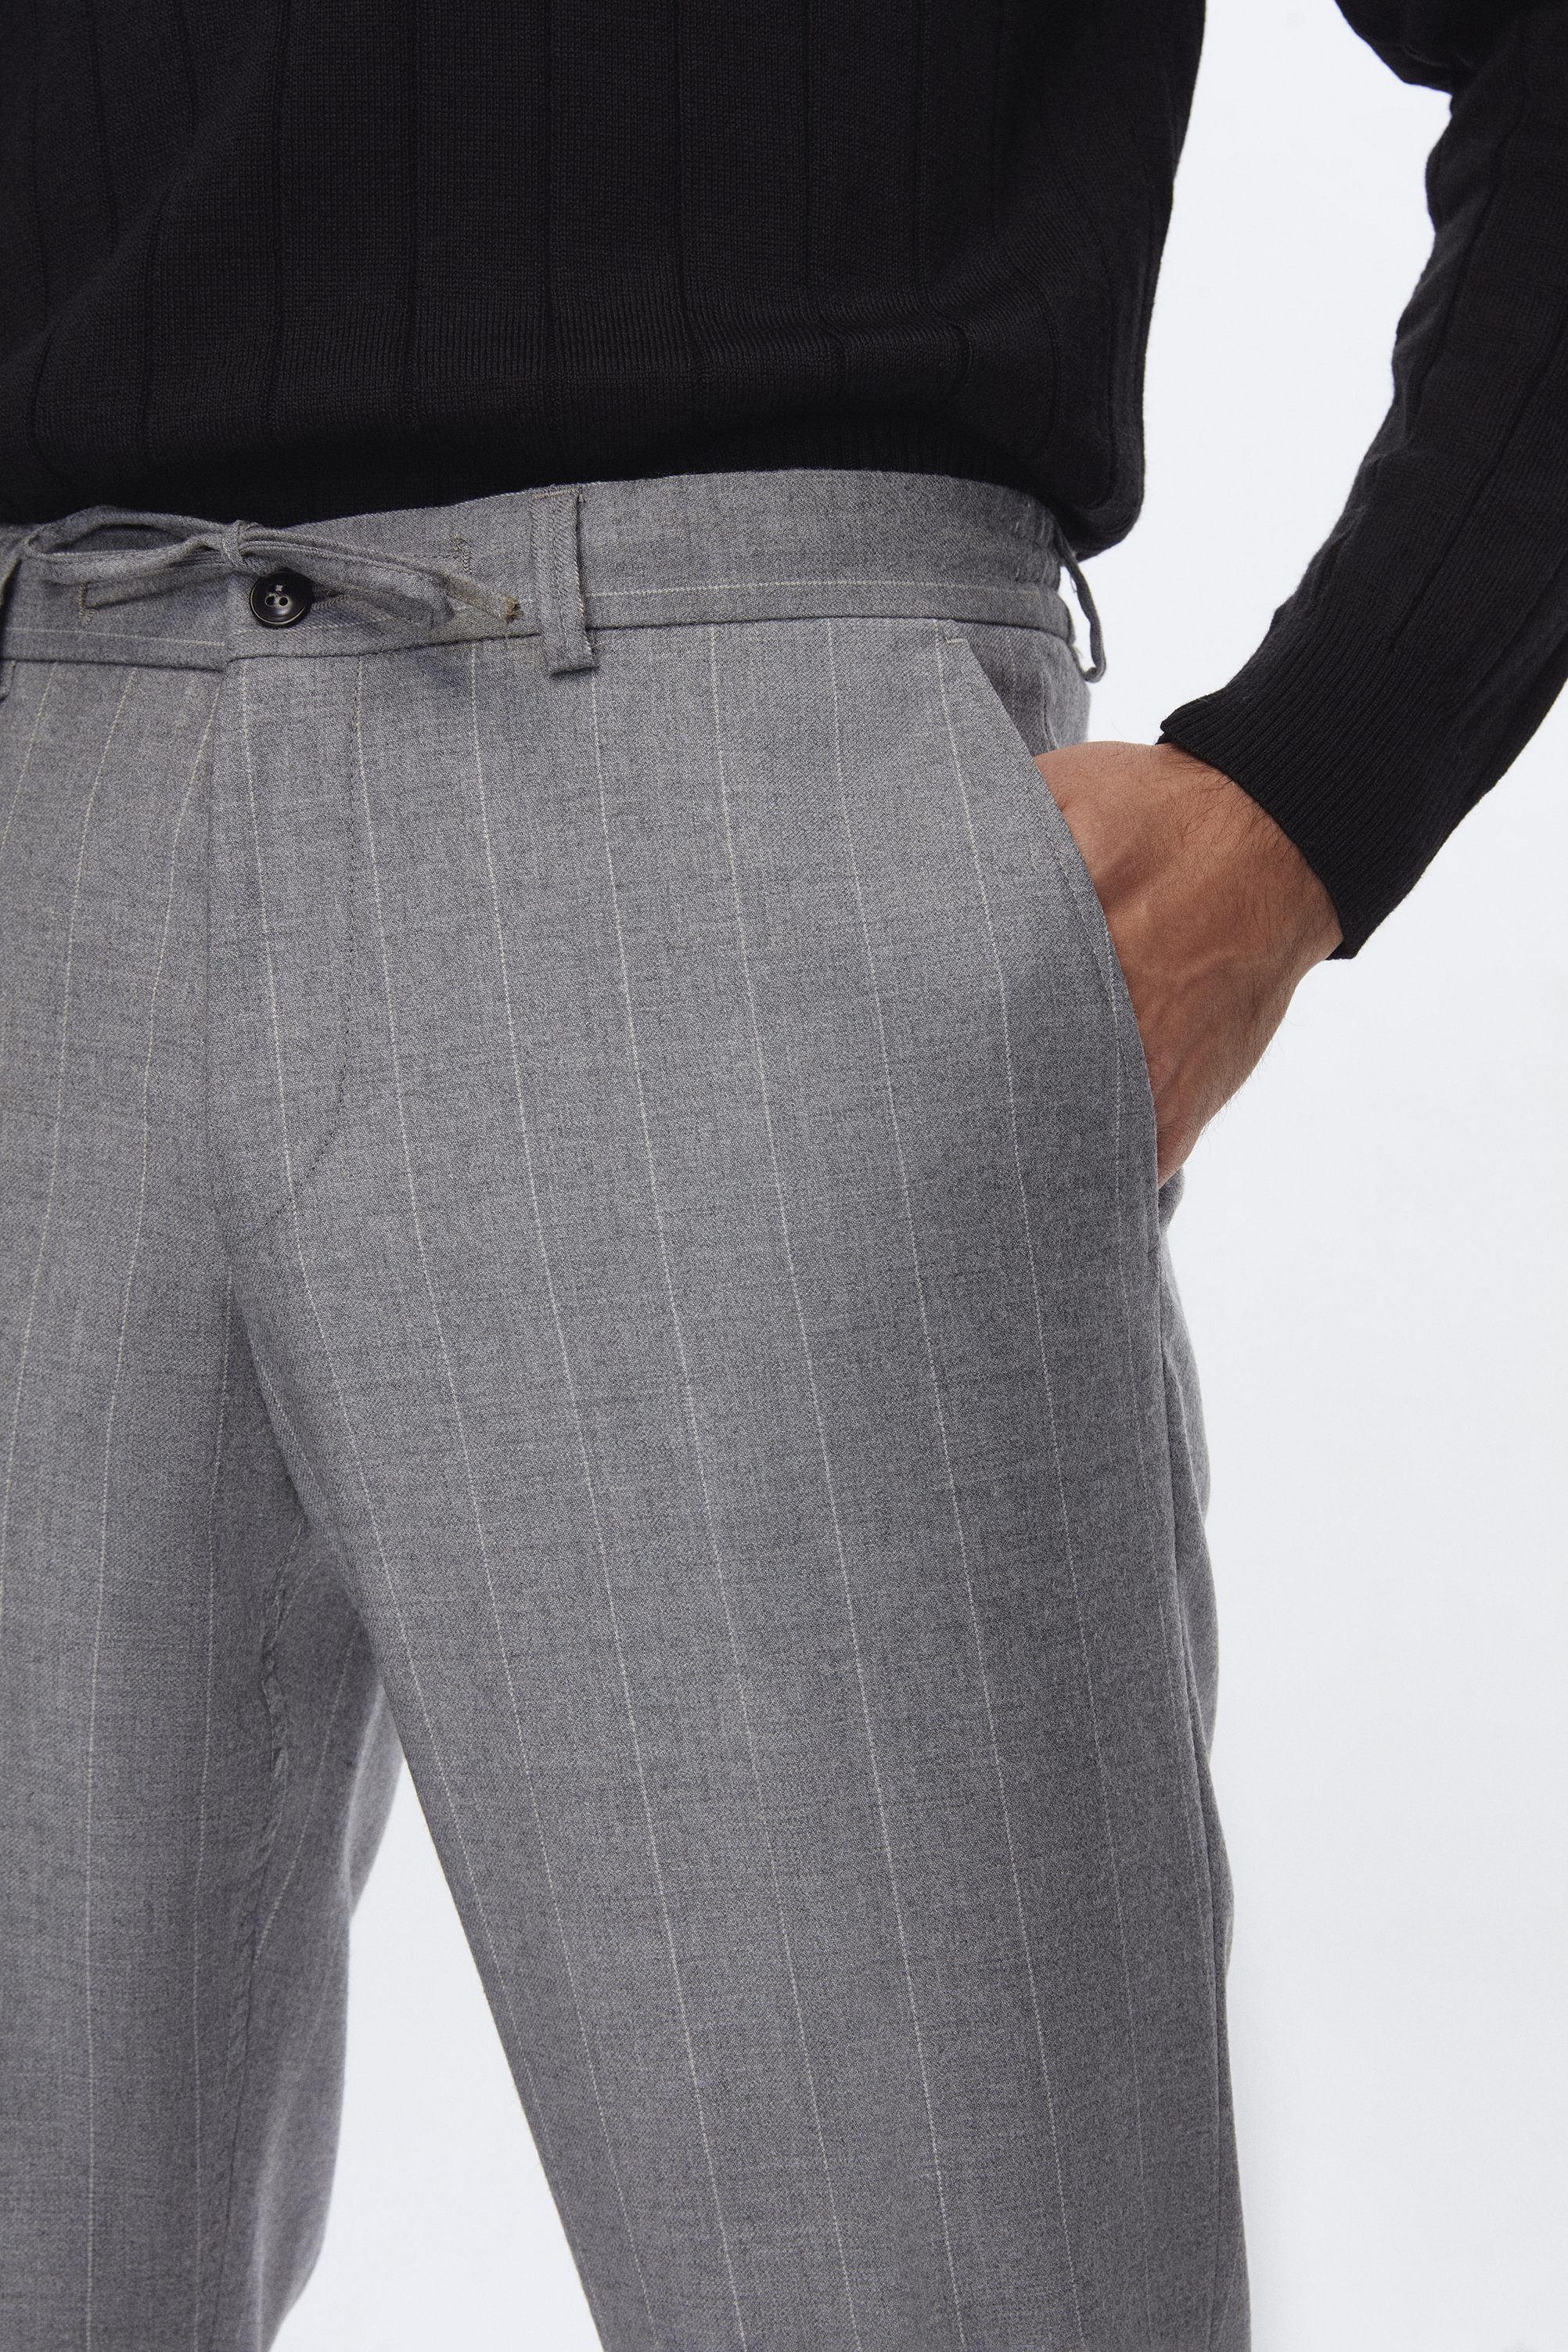 Damat Tween Damat Regular Fit Gri %100 Yün Chino Pantolon. 4